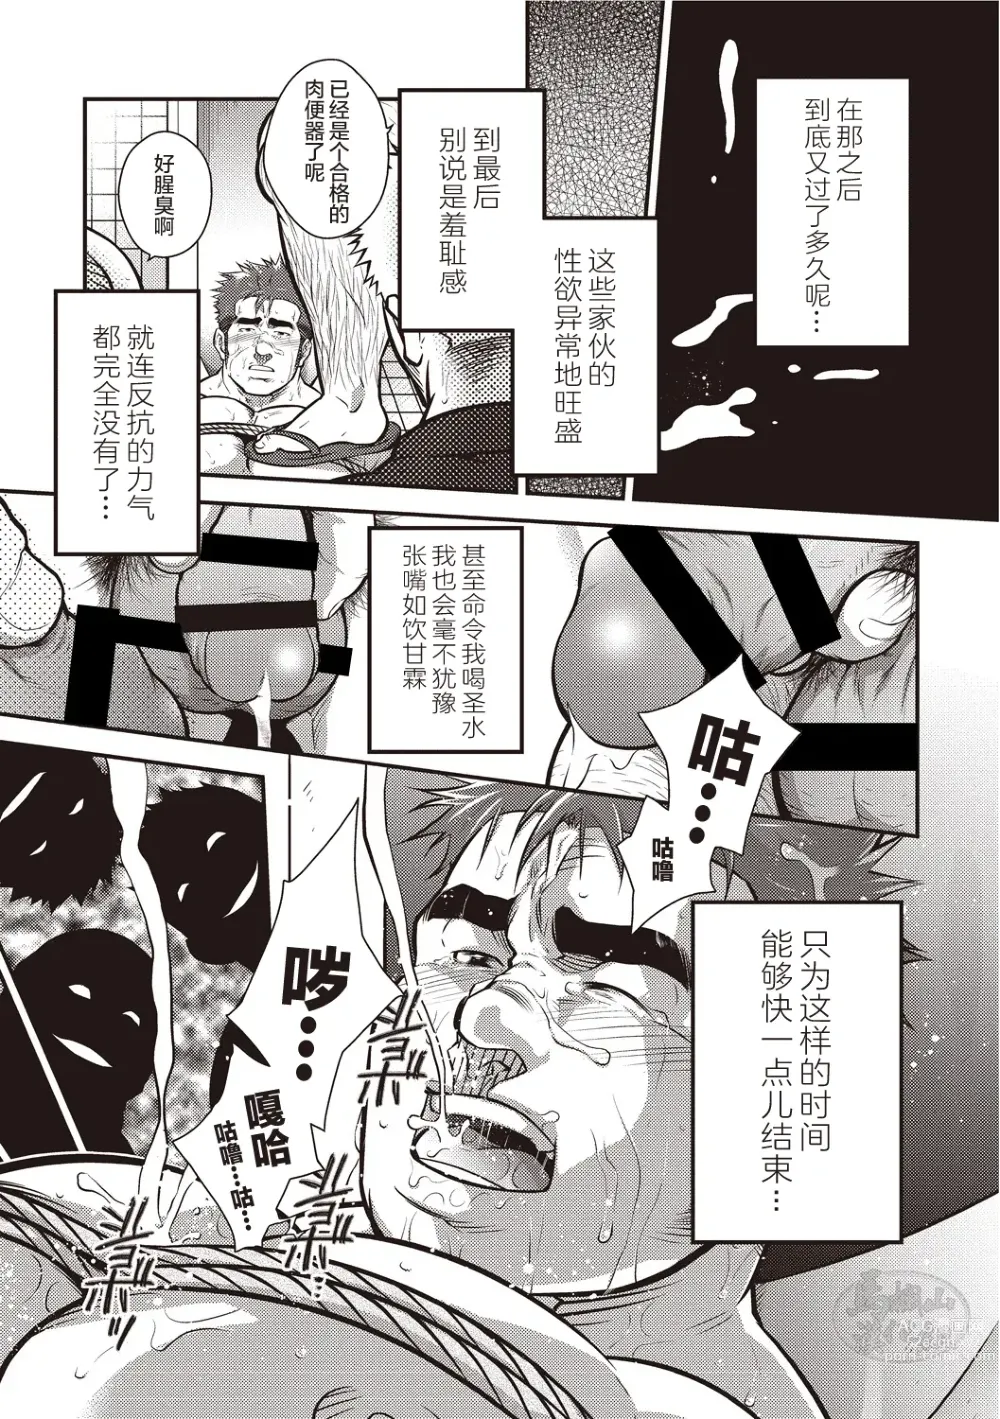 Page 16 of manga  激情男児!! 06 自恋的已婚肌肉男在公园里打飞机的话 / 梦中捆绑